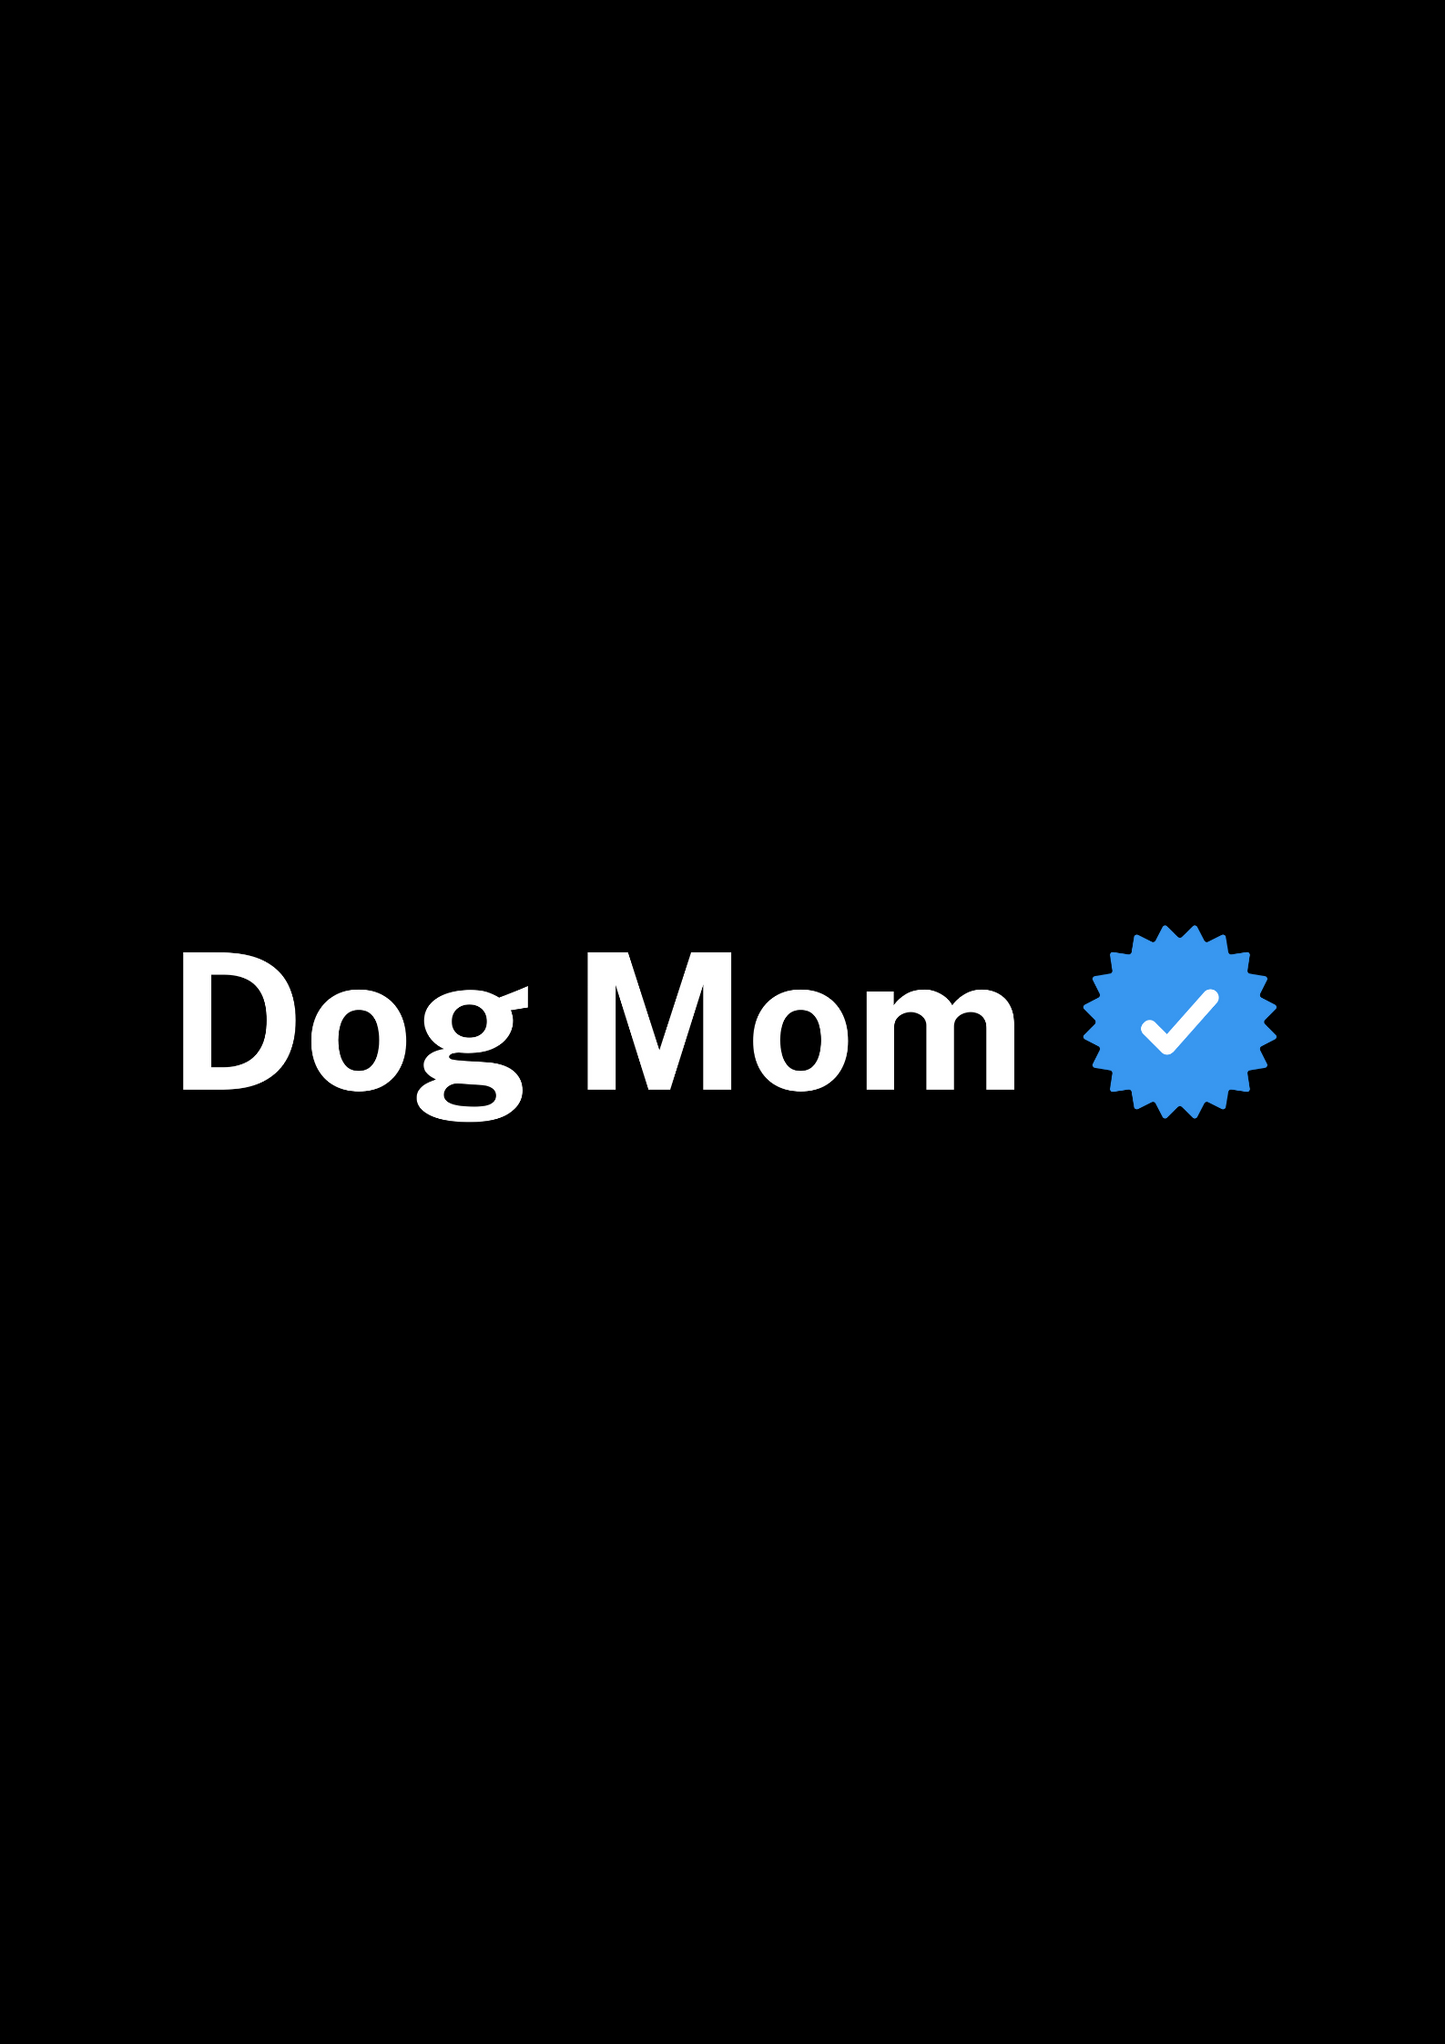 Verified Dog Mom